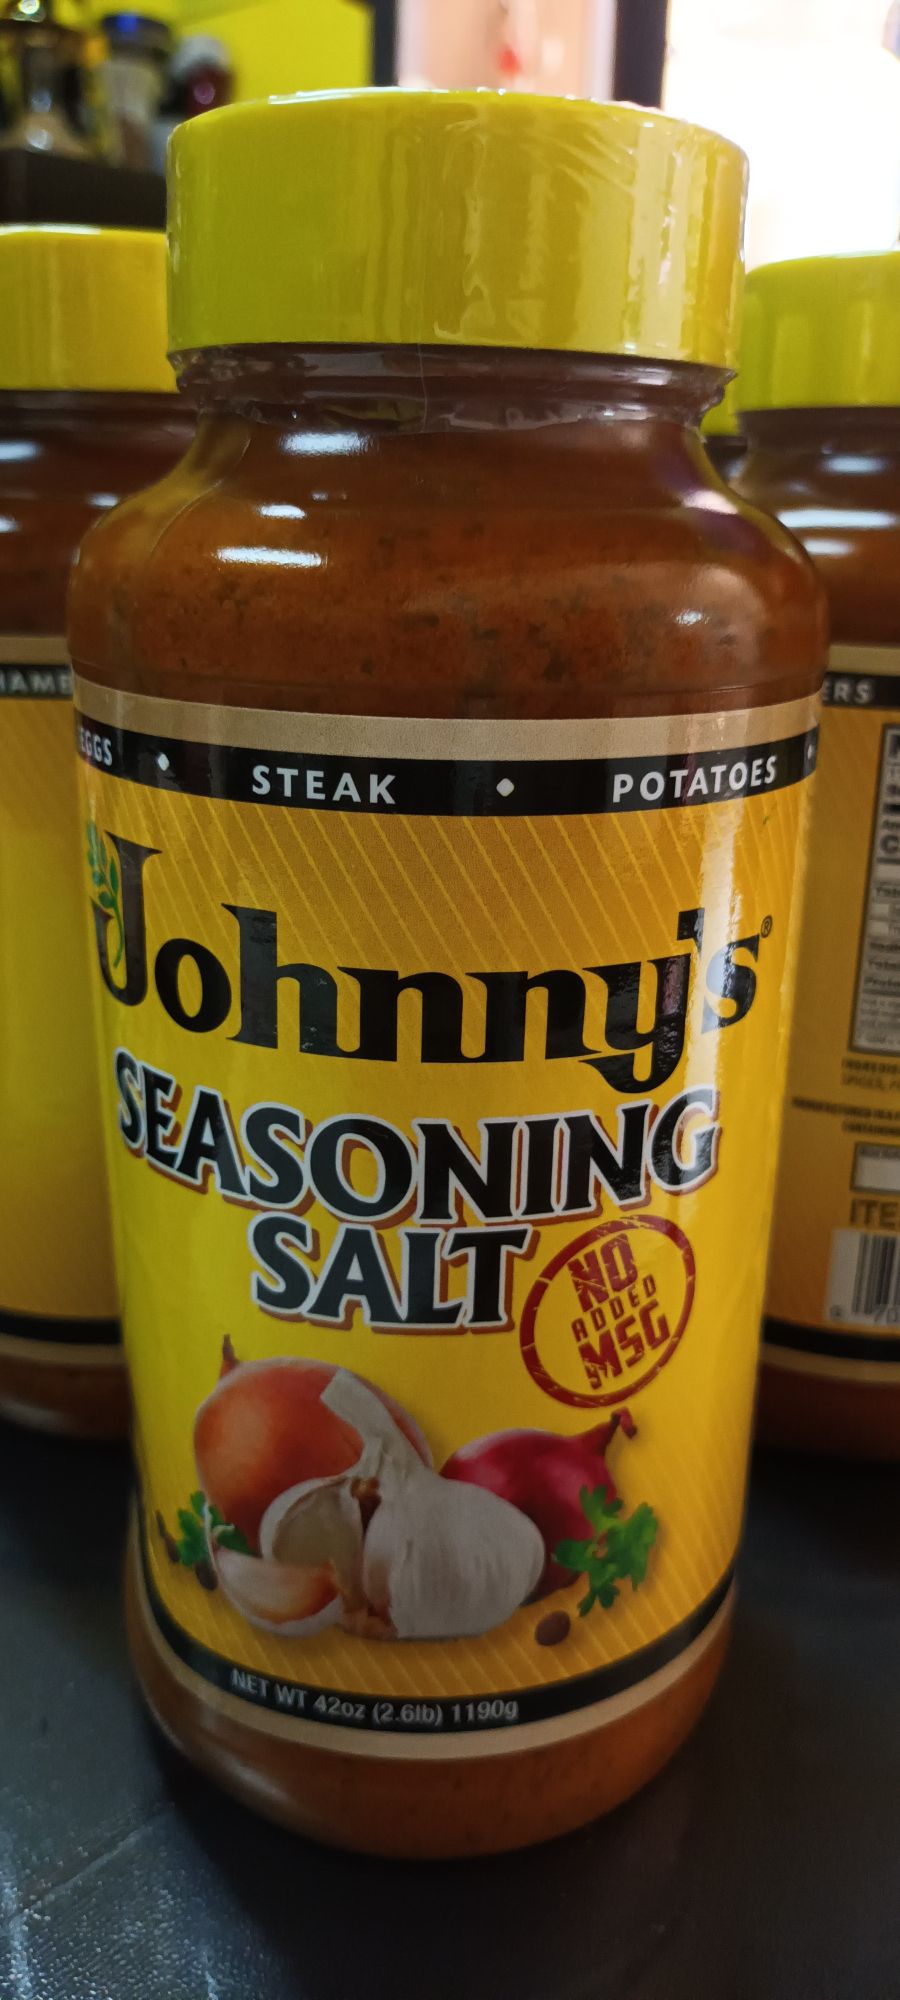 Johnny's Seasoning Salt